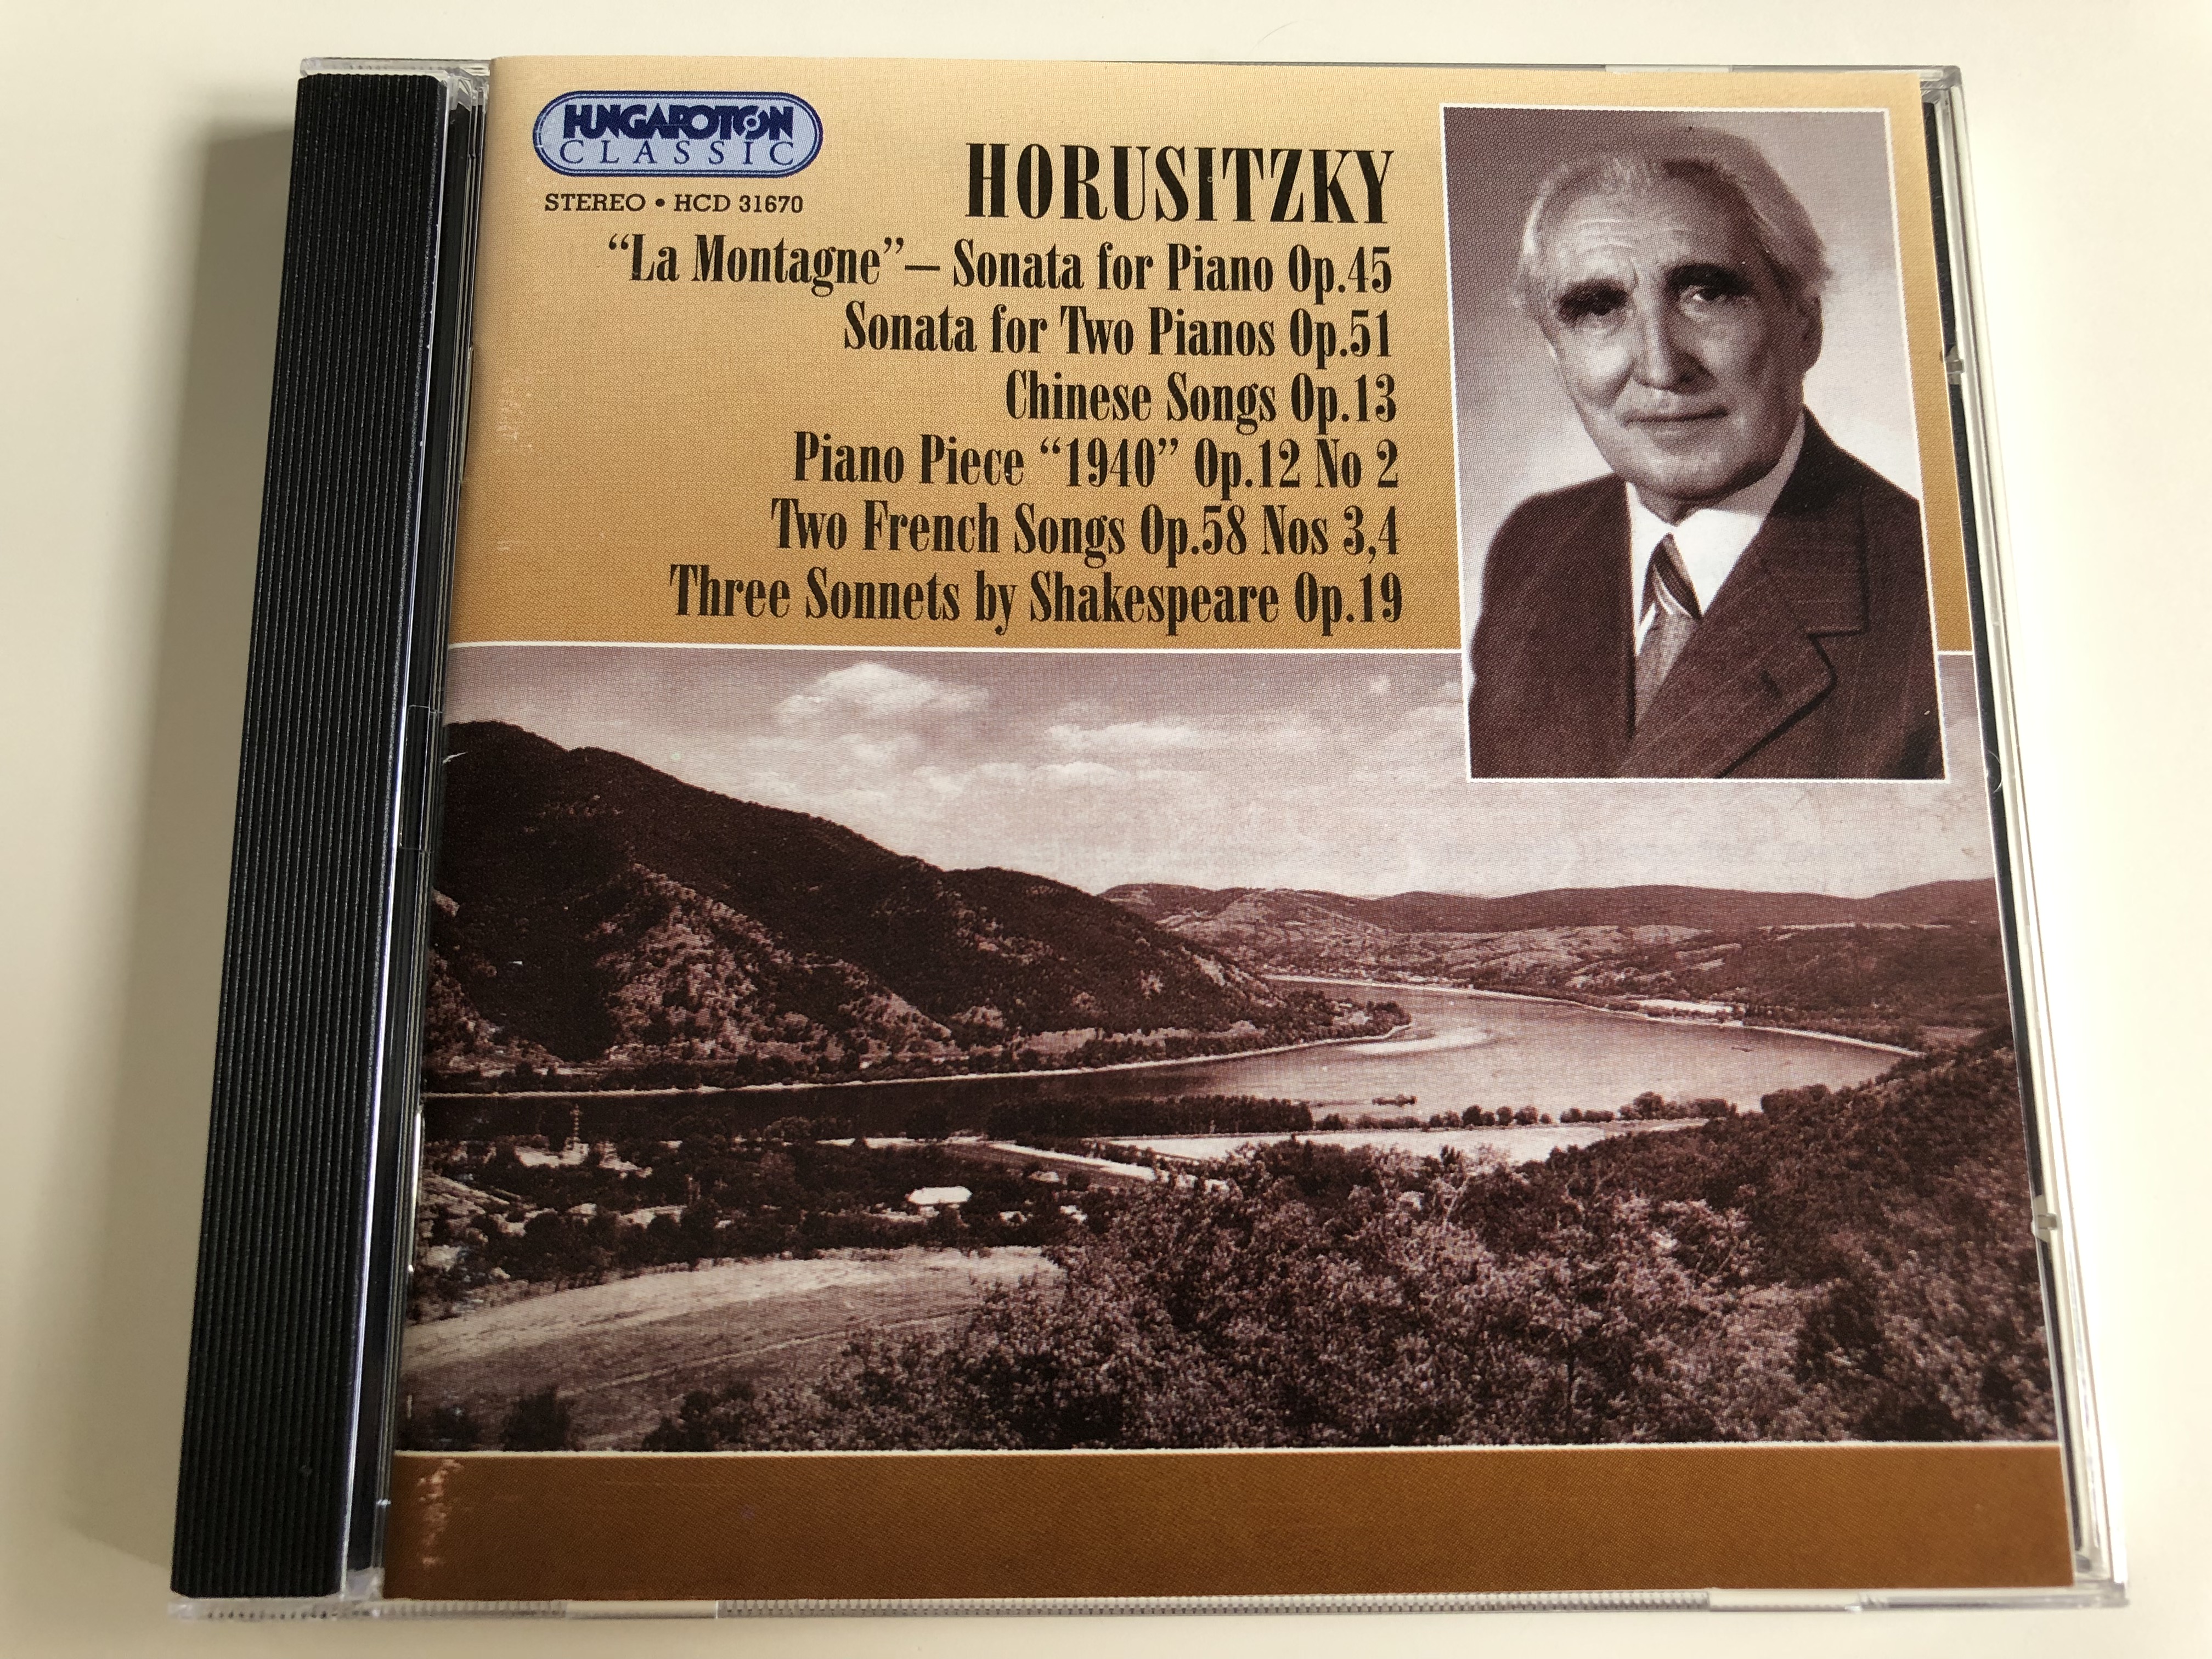 horusitzky-la-montagne-sonata-for-piano-op.-45-sonata-for-two-pianos-op.-51-chinese-songs-op-13.-margit-l-szl-soprano-boldizs-r-ke-nch-tenor-imre-rohmann-ferenc-r-czey-pianos-hcd-31670-hungaroton-audio-cd-1997-1-.jpg